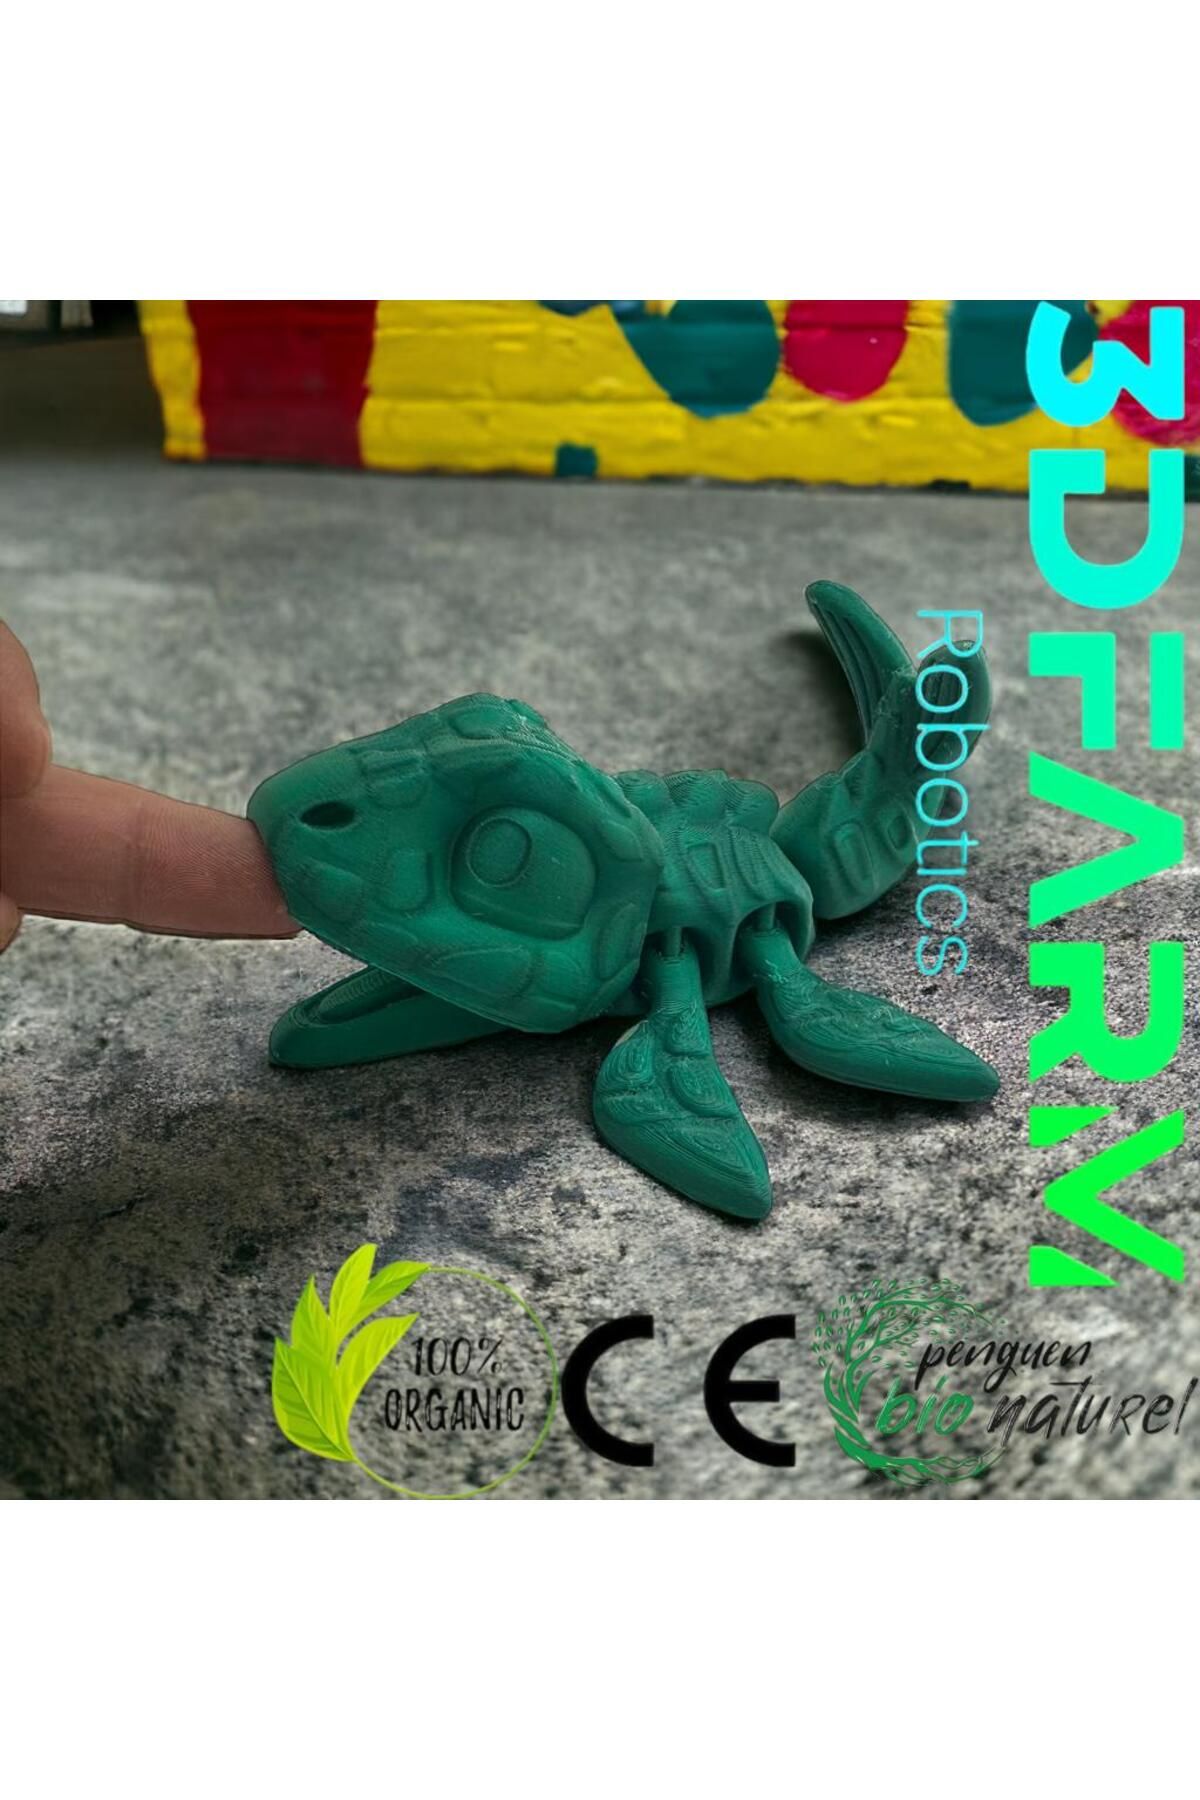 3DFarm Robotics 3DFarm Organic Toys MOSASAUR DINOSAUR(mosazur dinozor)